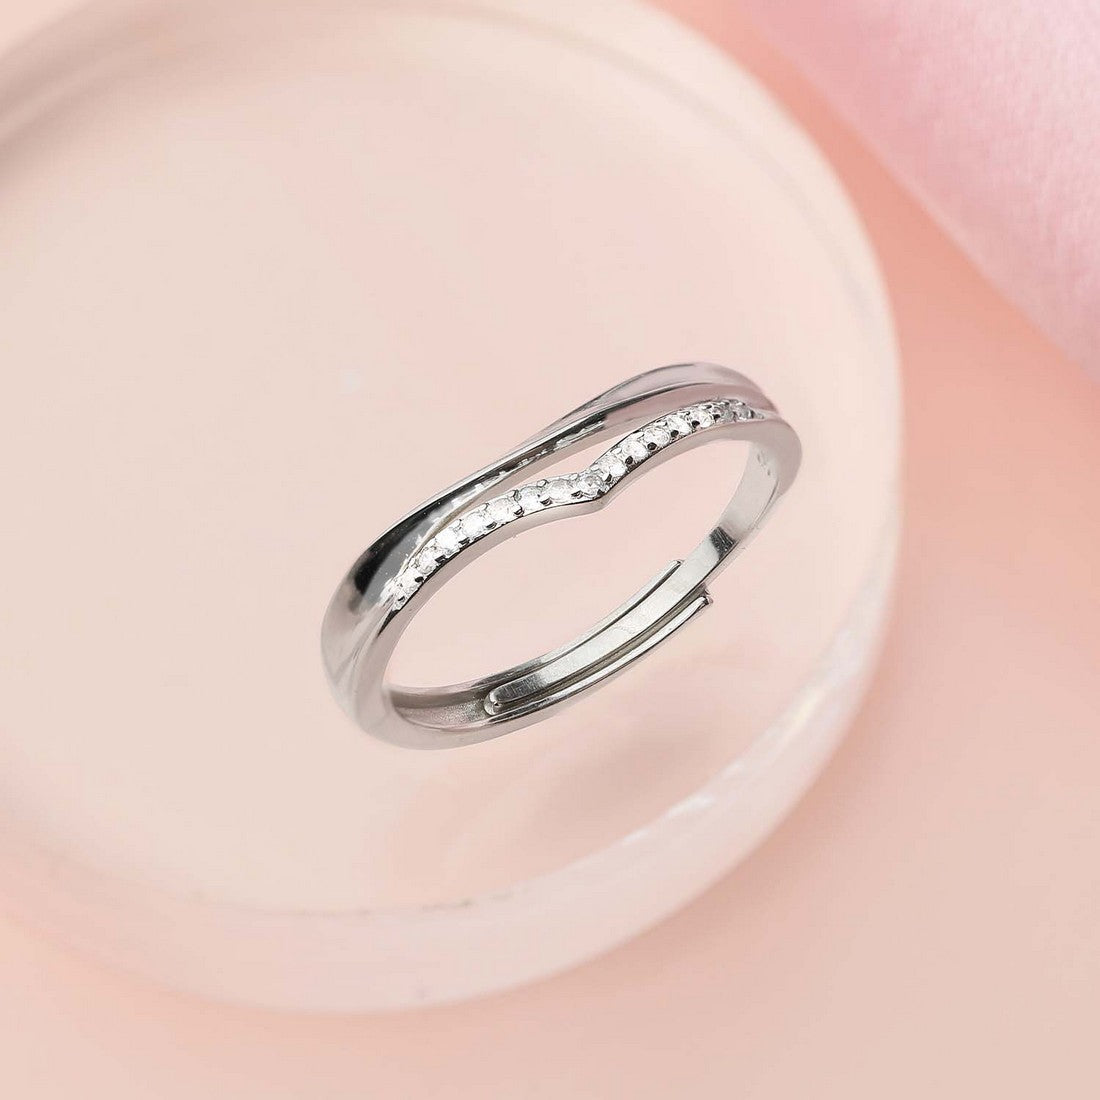 The Minimalist 925 Silver Ring Gift Hamper